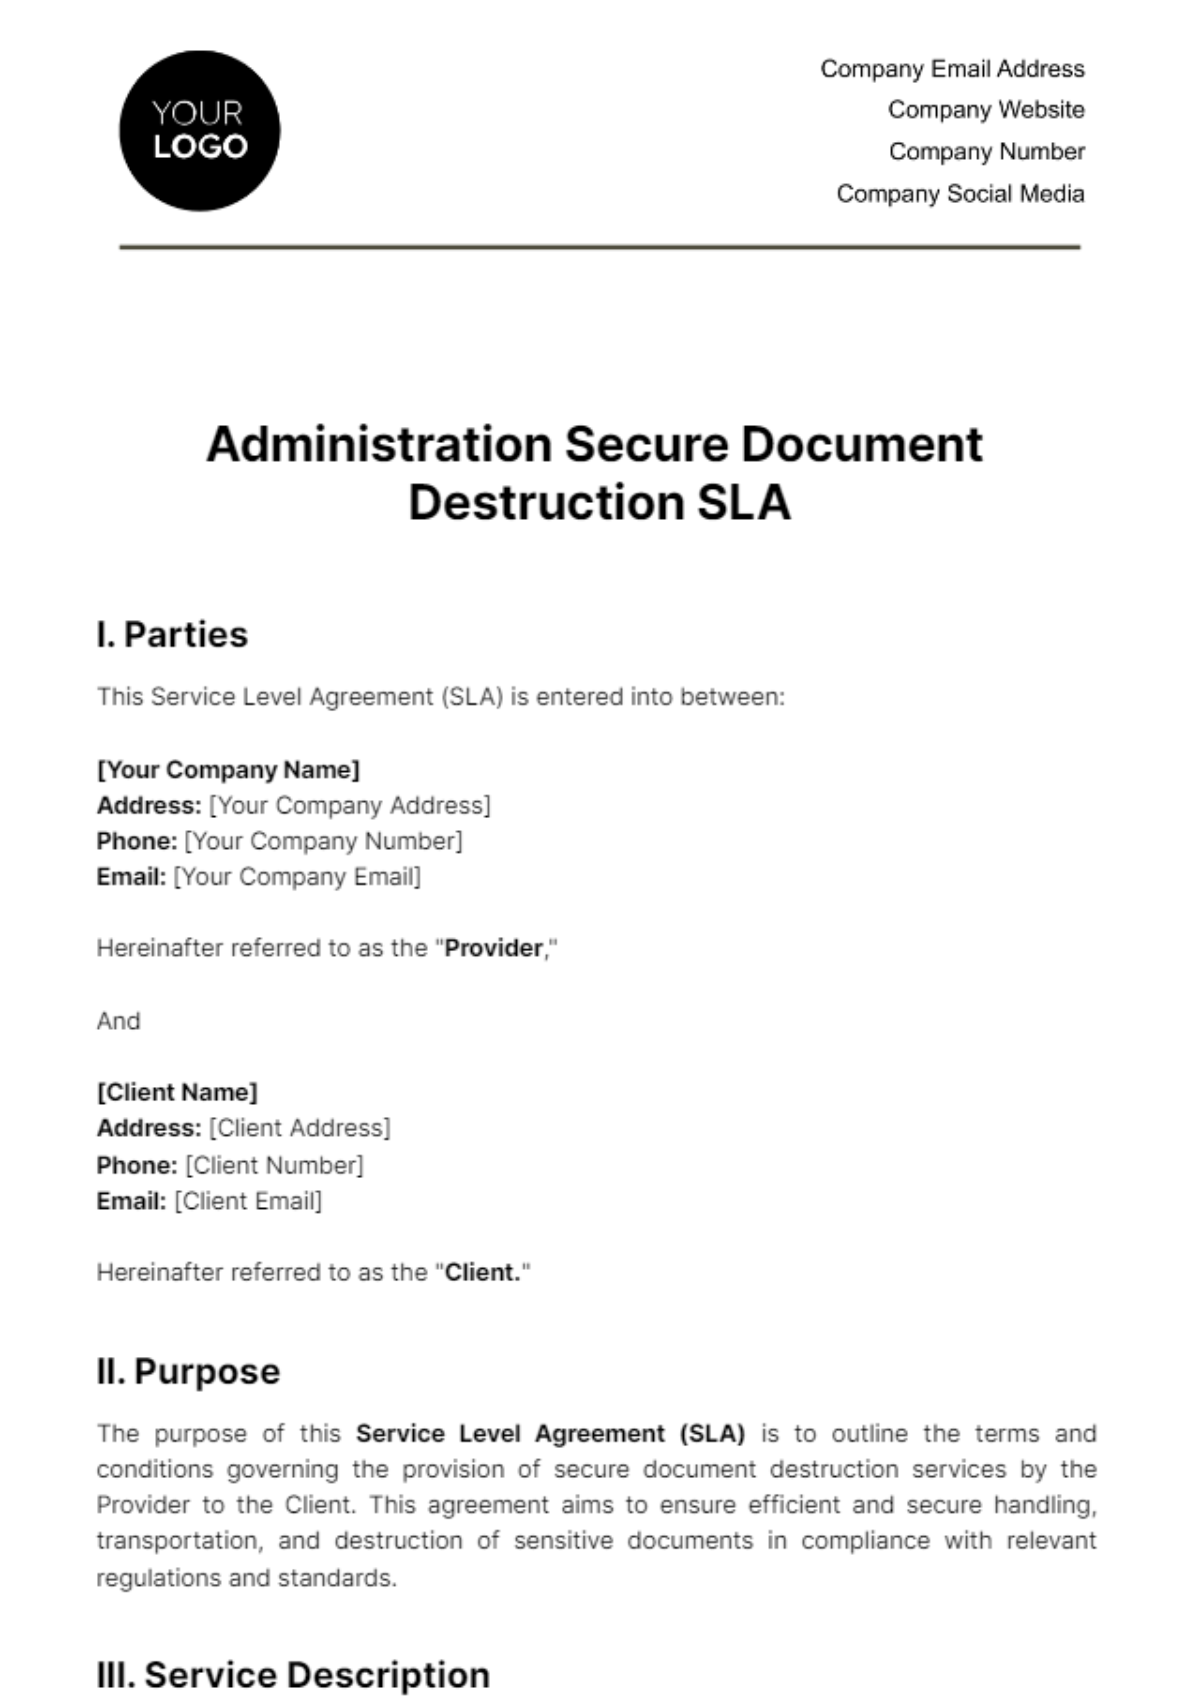 Administration Secure Document Destruction SLA Template